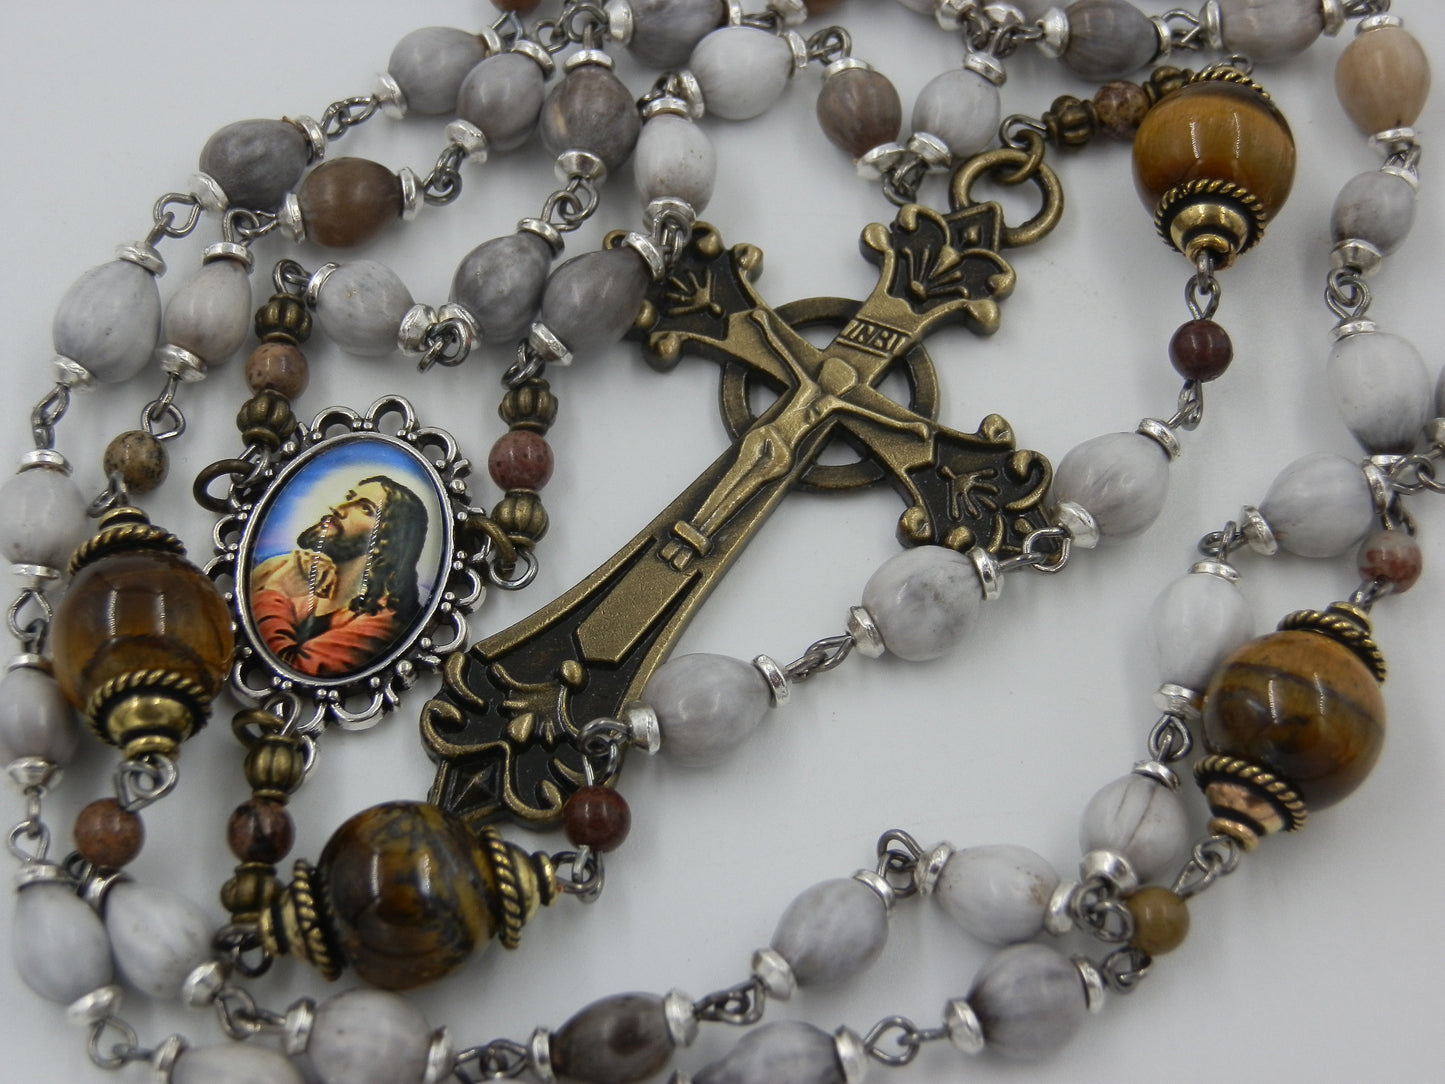 The Agony in the Garden Rosary beads, Job's tear's Rosary beads, Rosaries, Gemstone Rosaries, Brass Crucifix, Patron Saint Prayer beads,